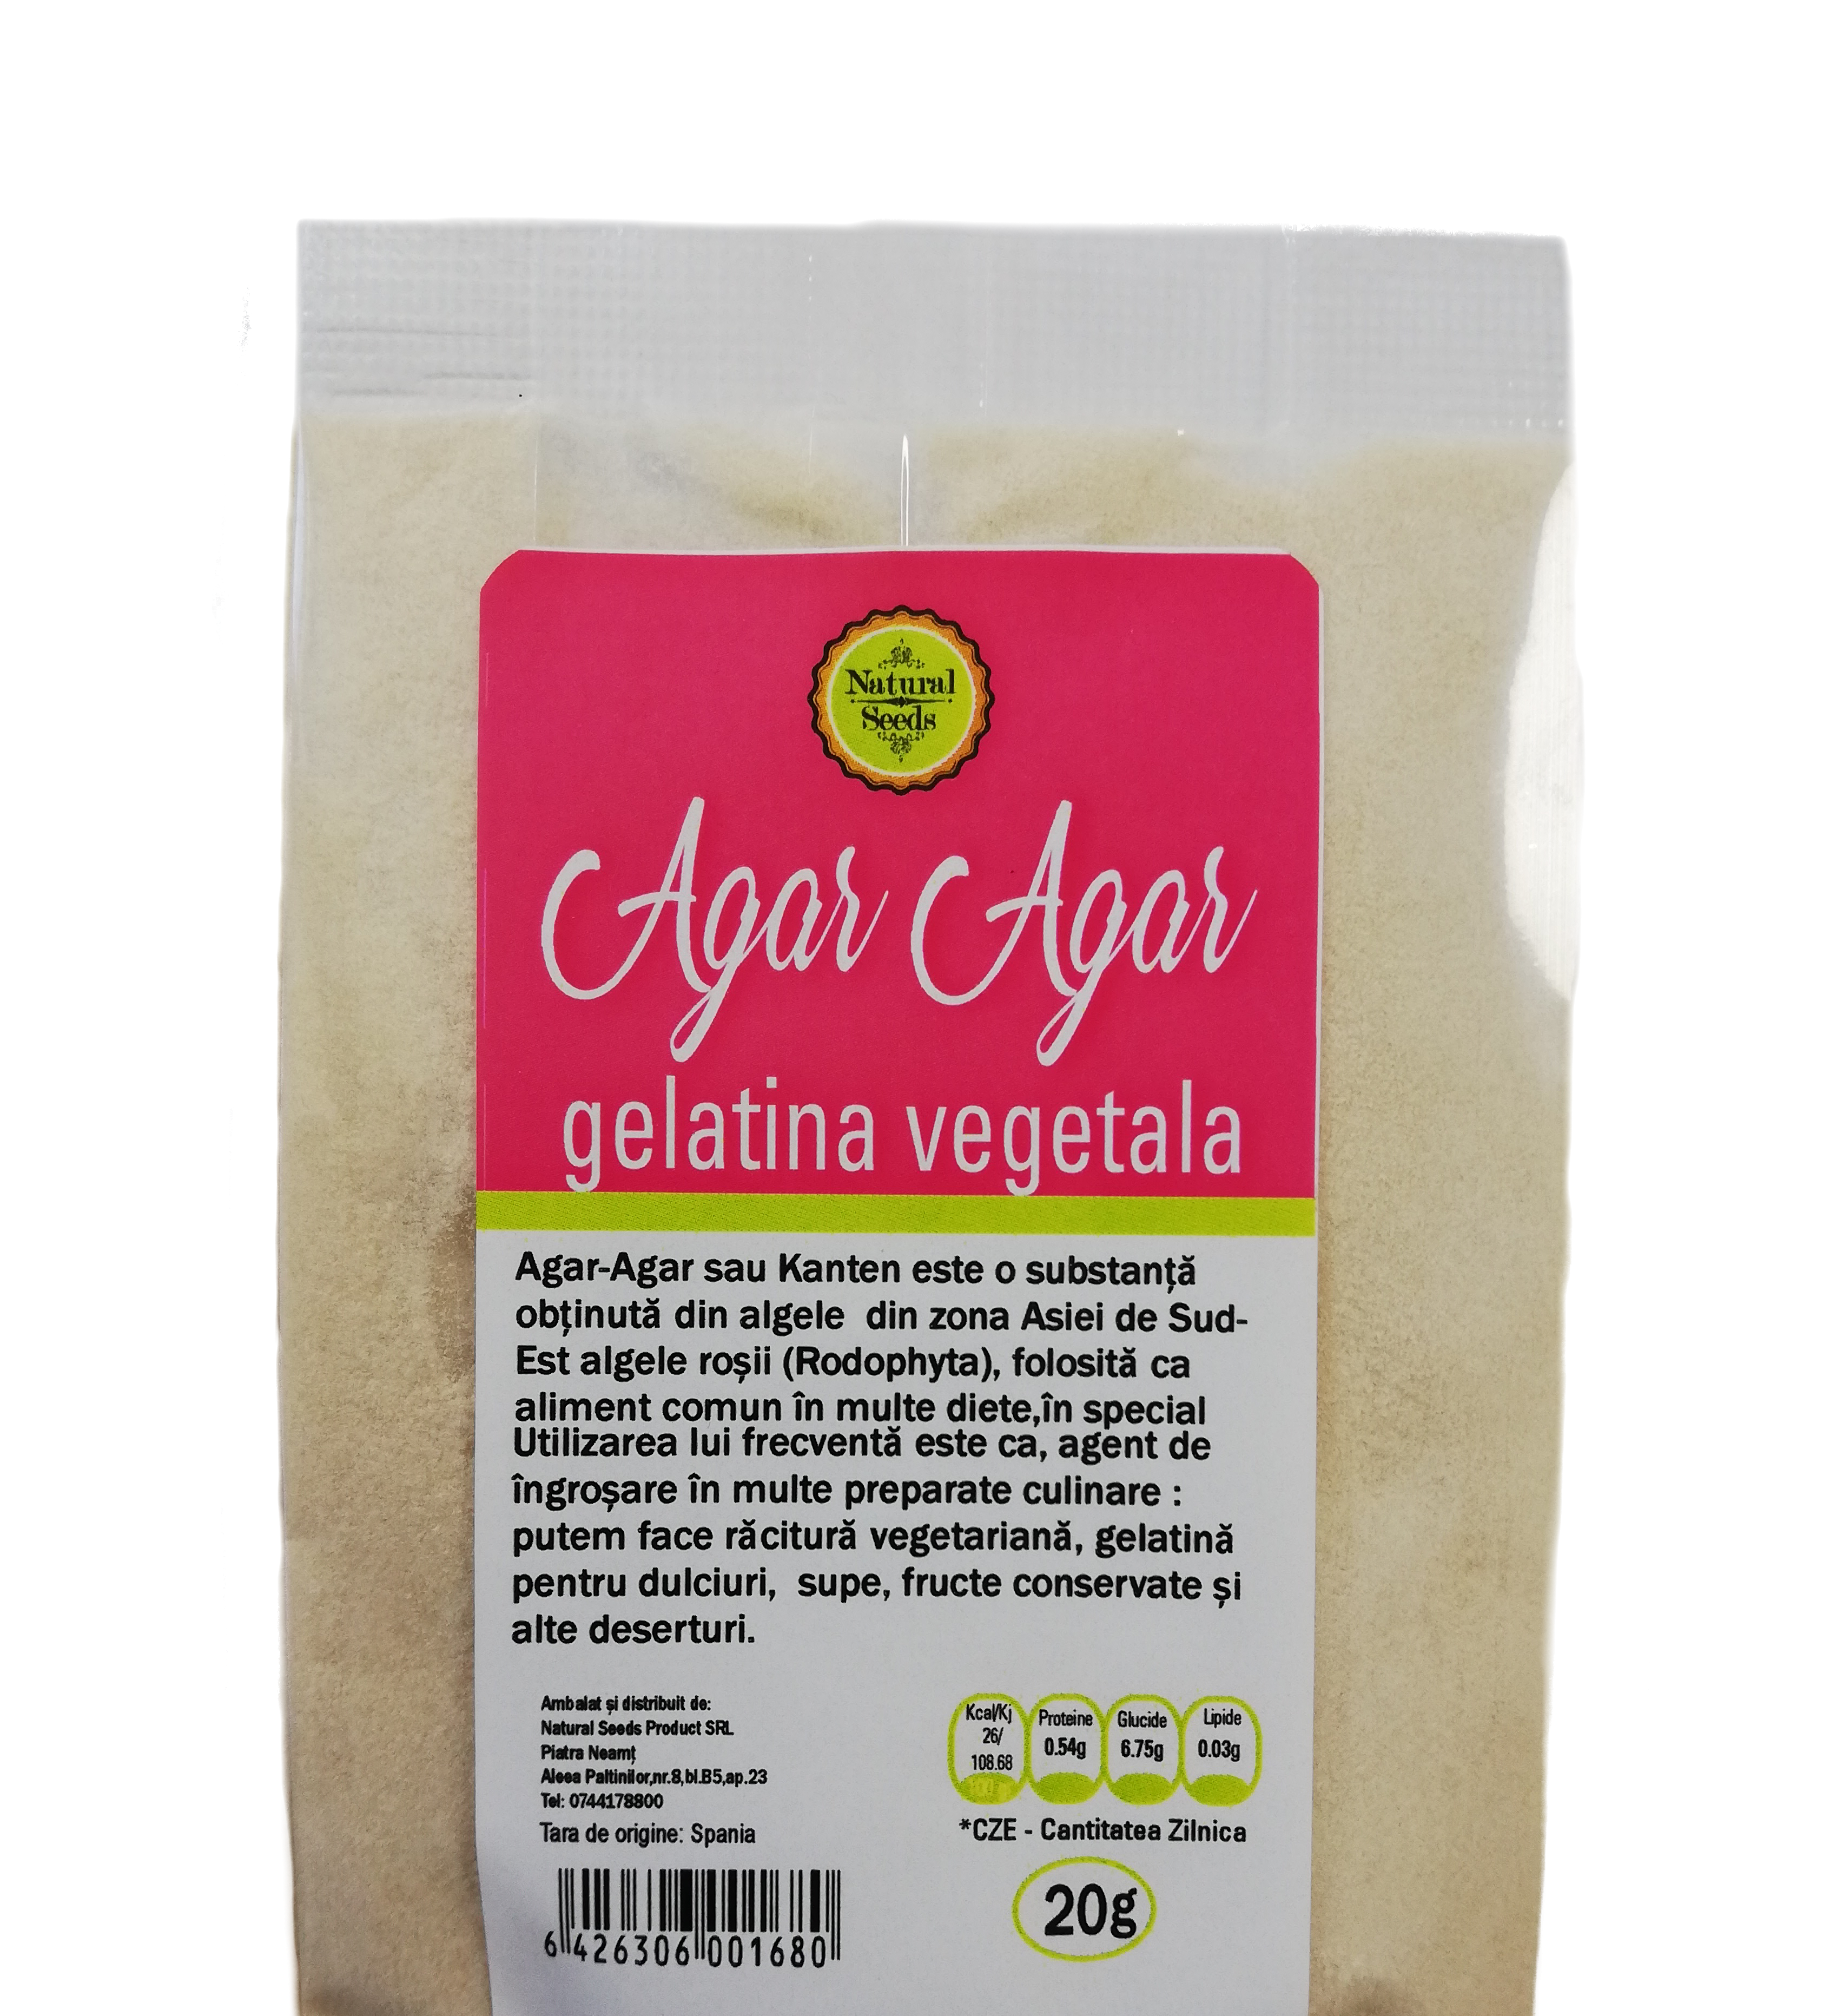 Agar Agar gelatina vegetala, Natural Seeds Product